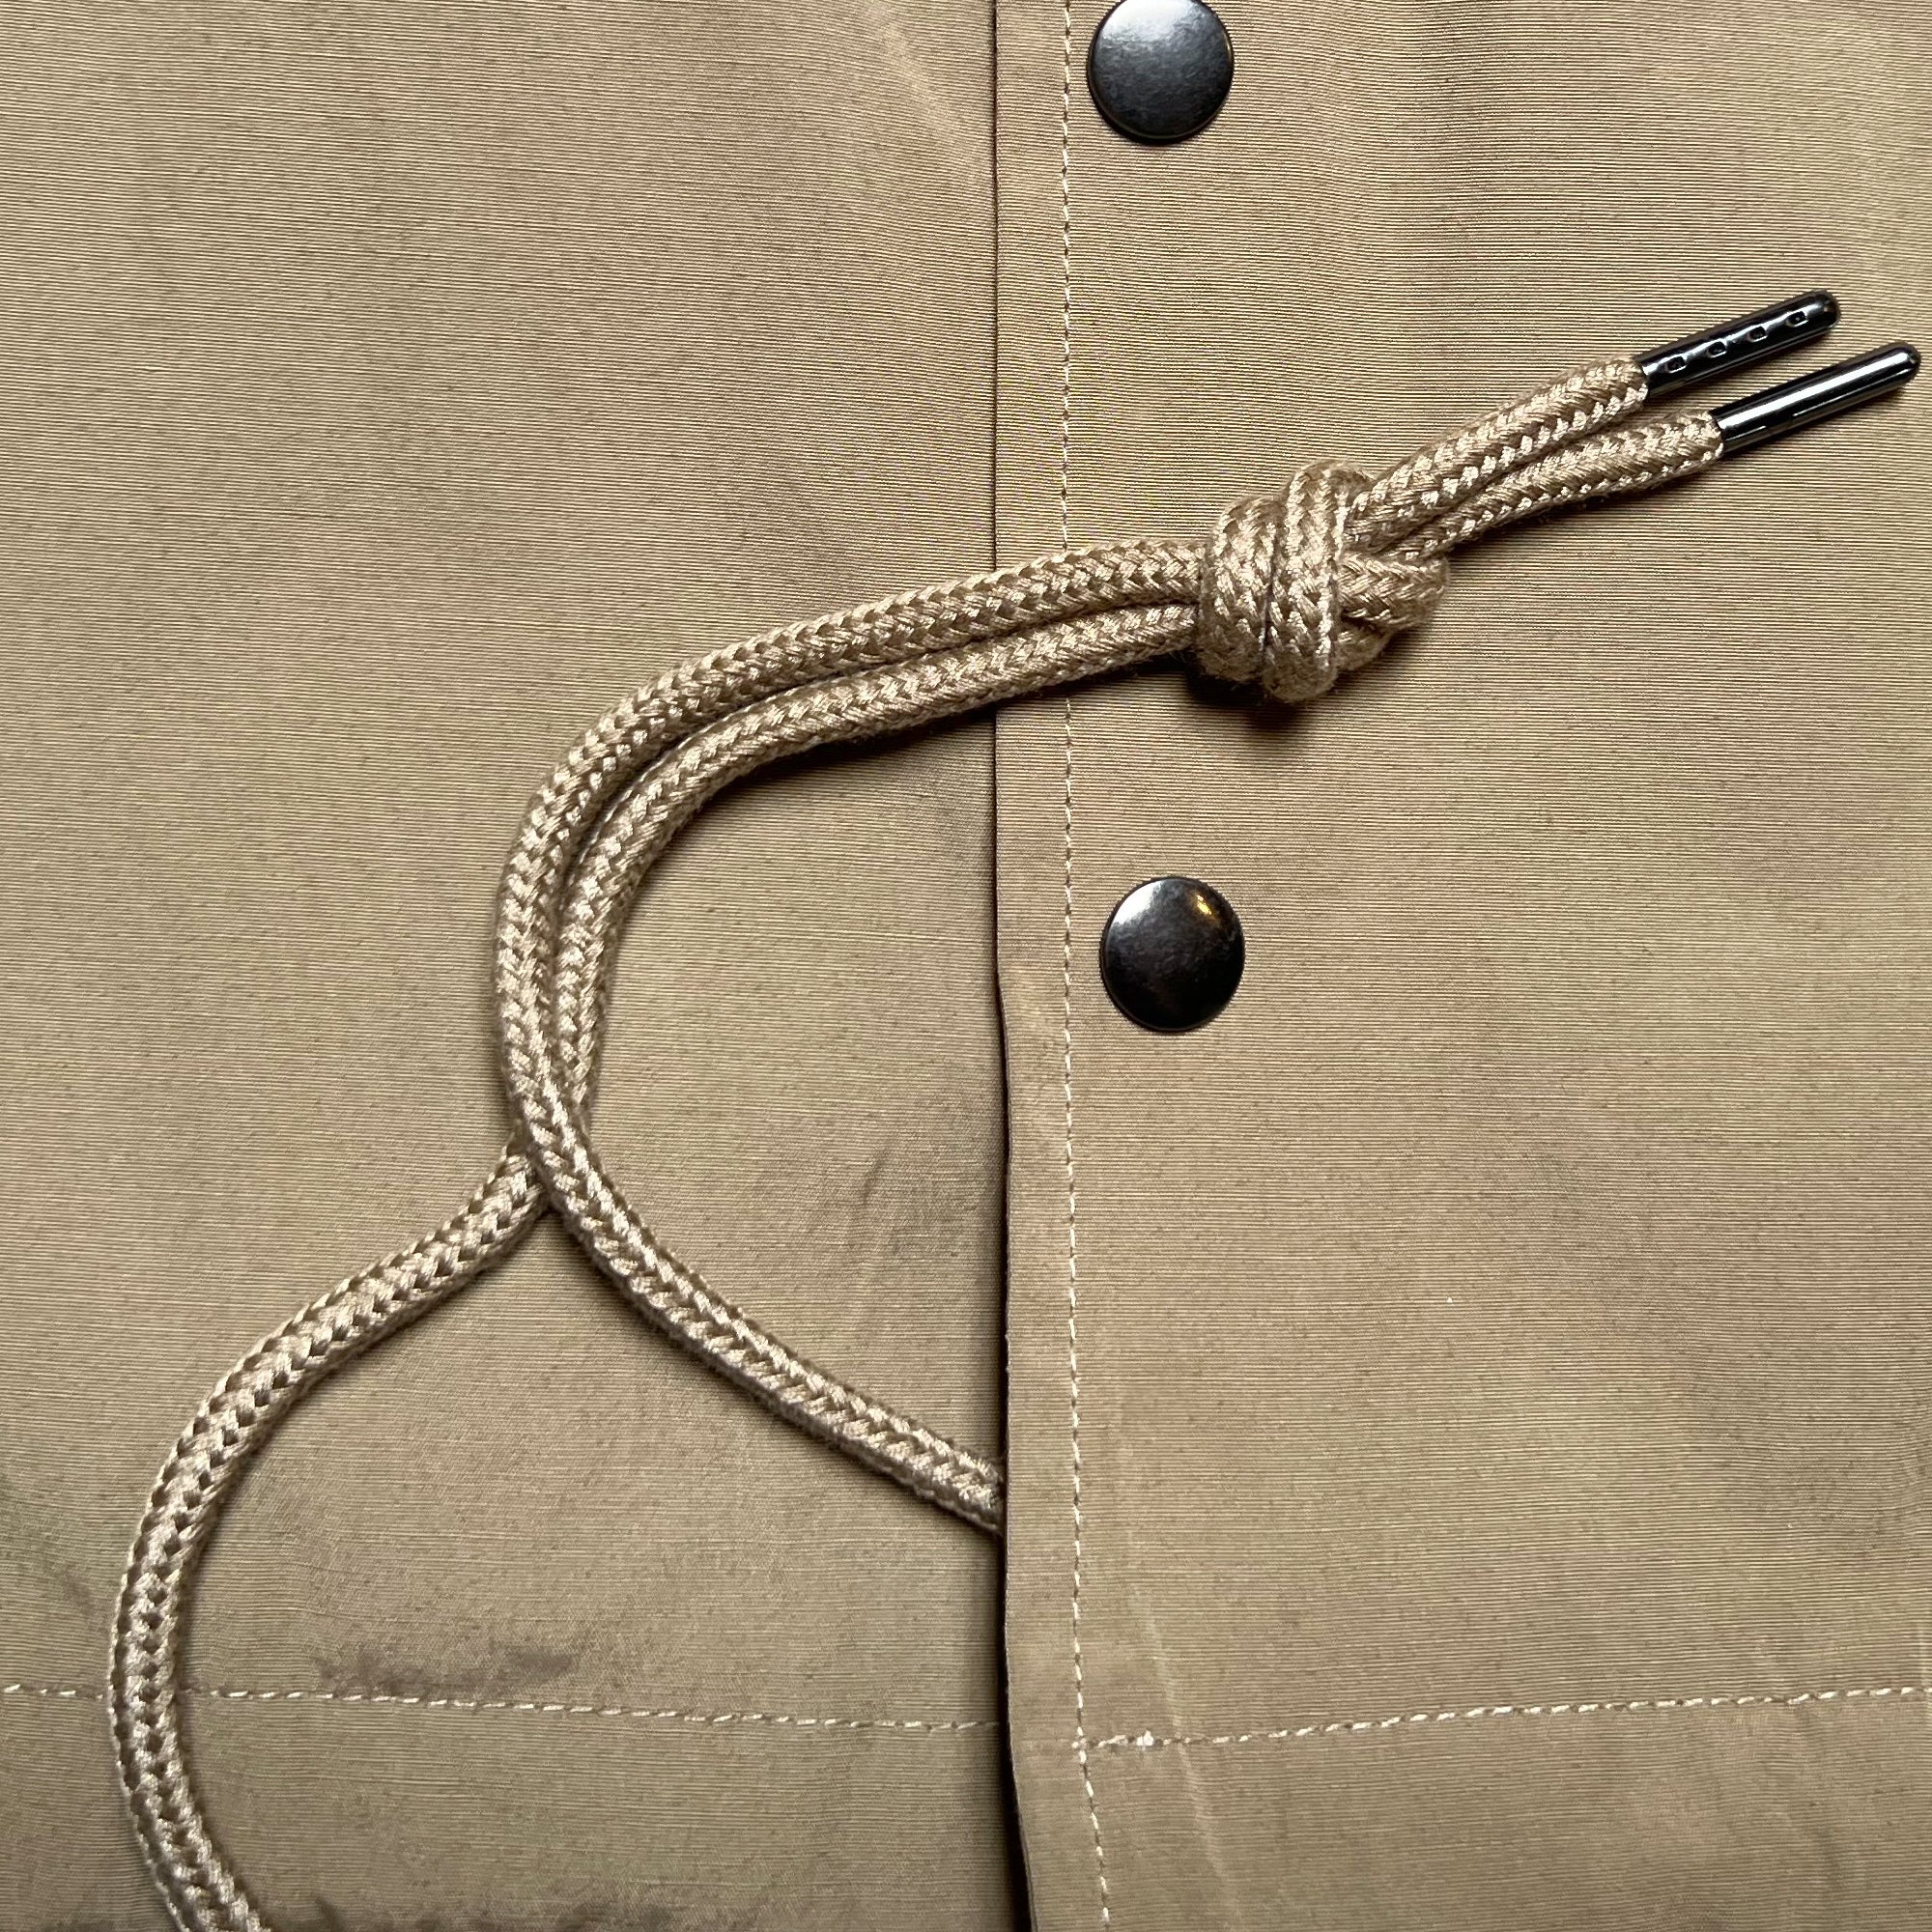 Close up snap closures and waist drawstring on khaki cotton coaches jacket.